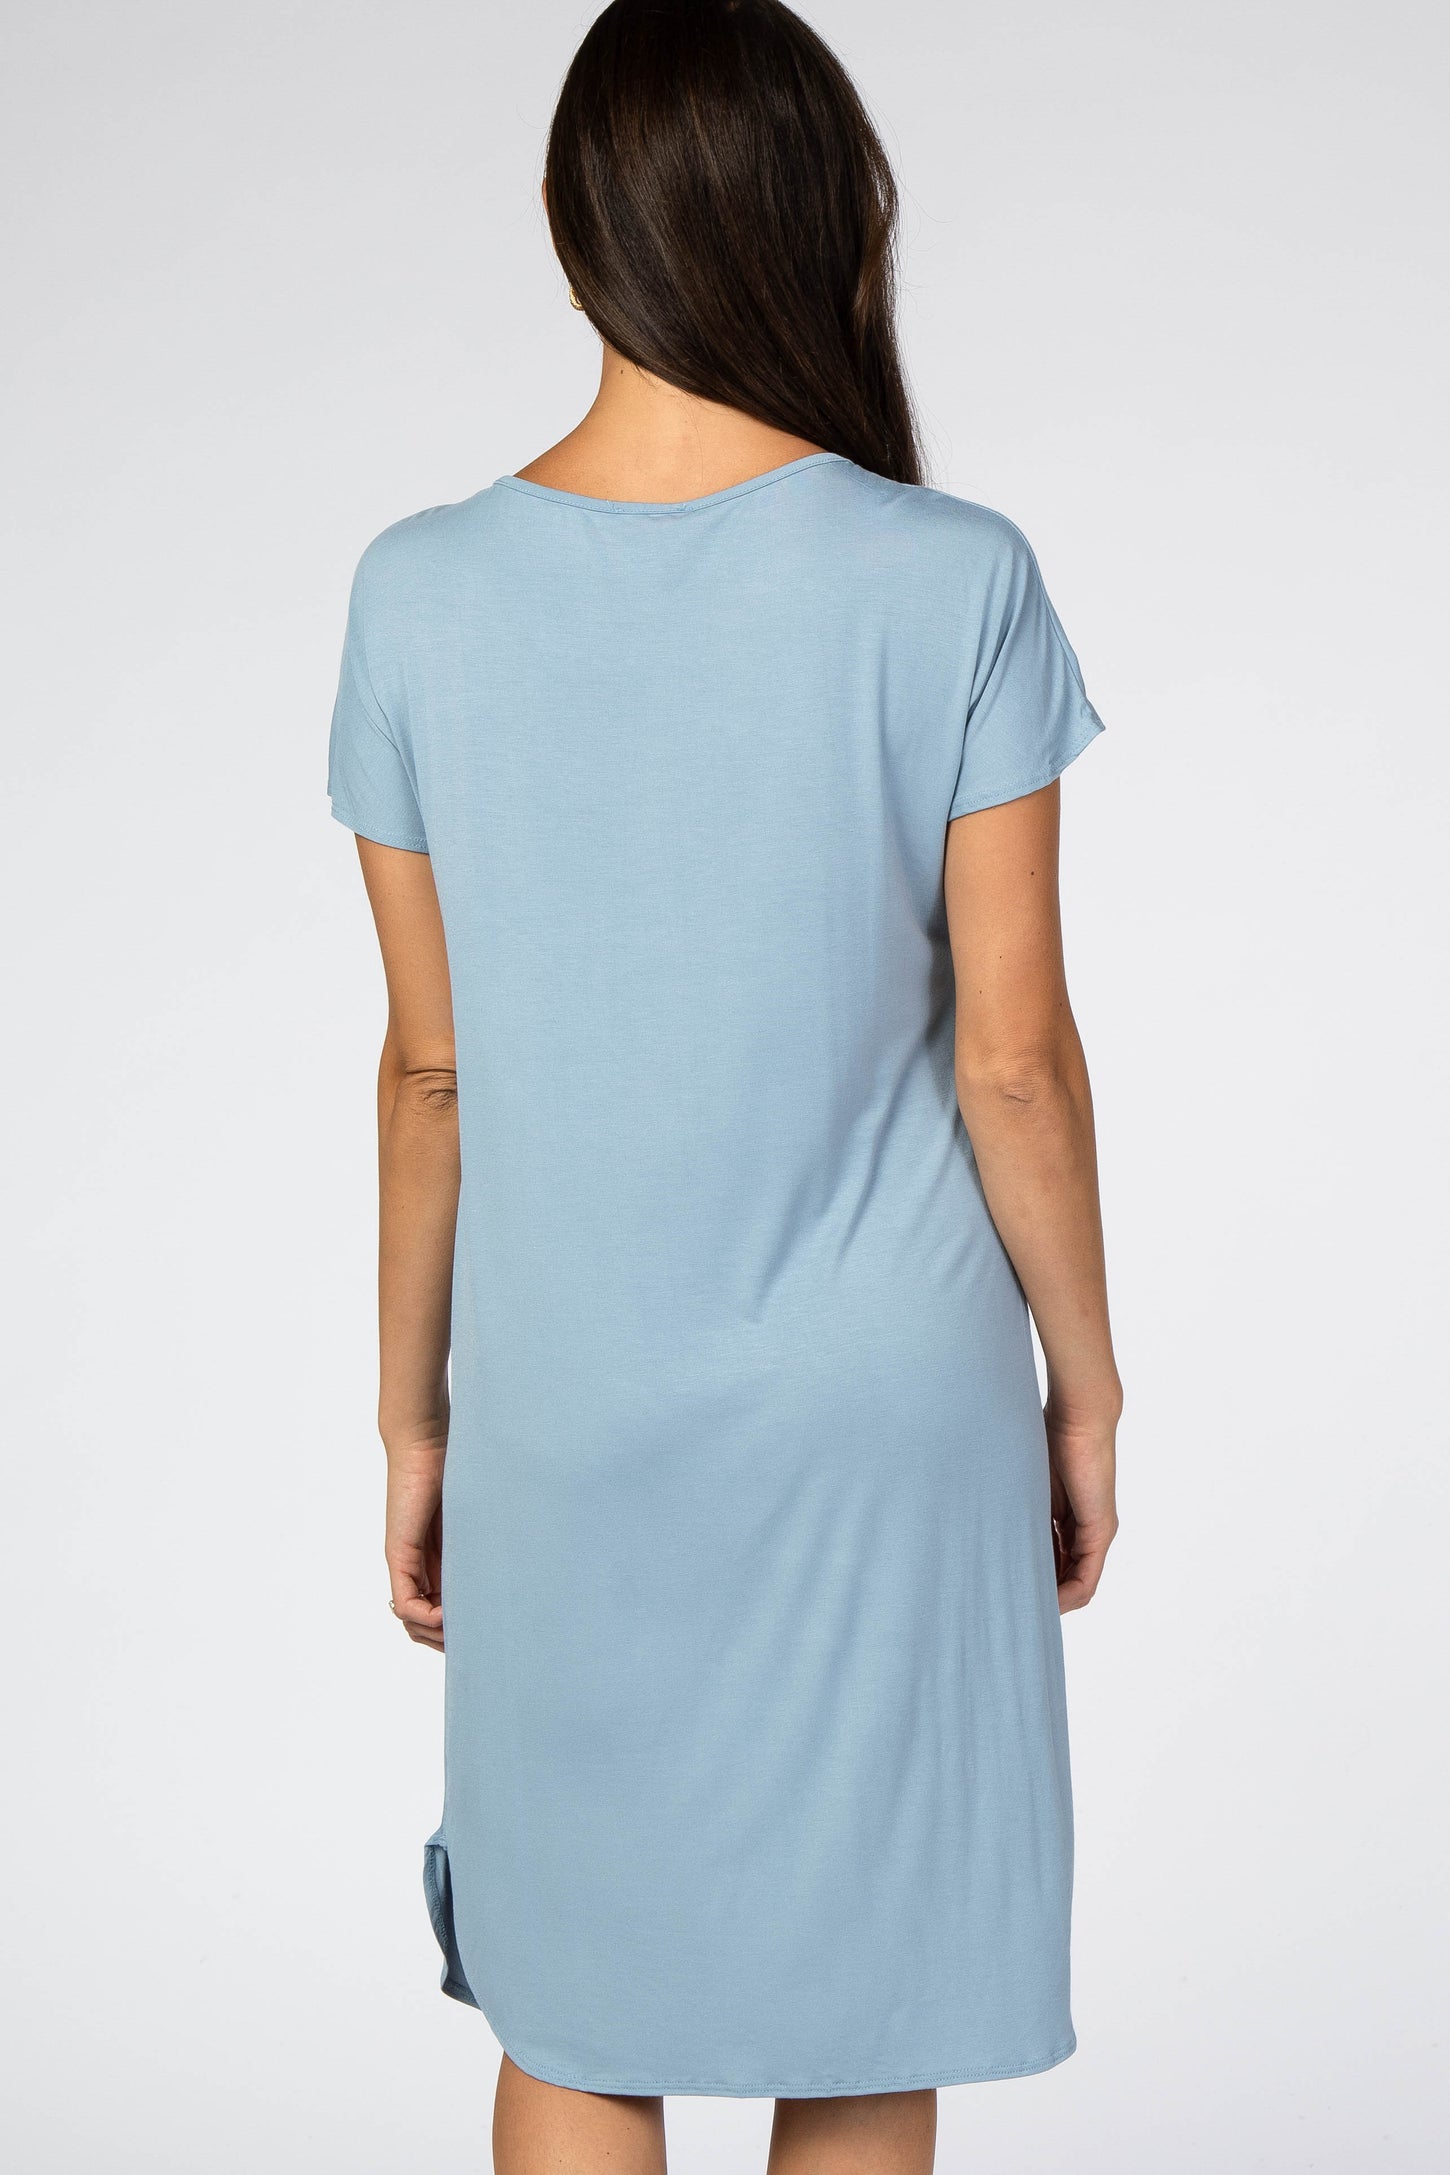 Blue Basic Dress